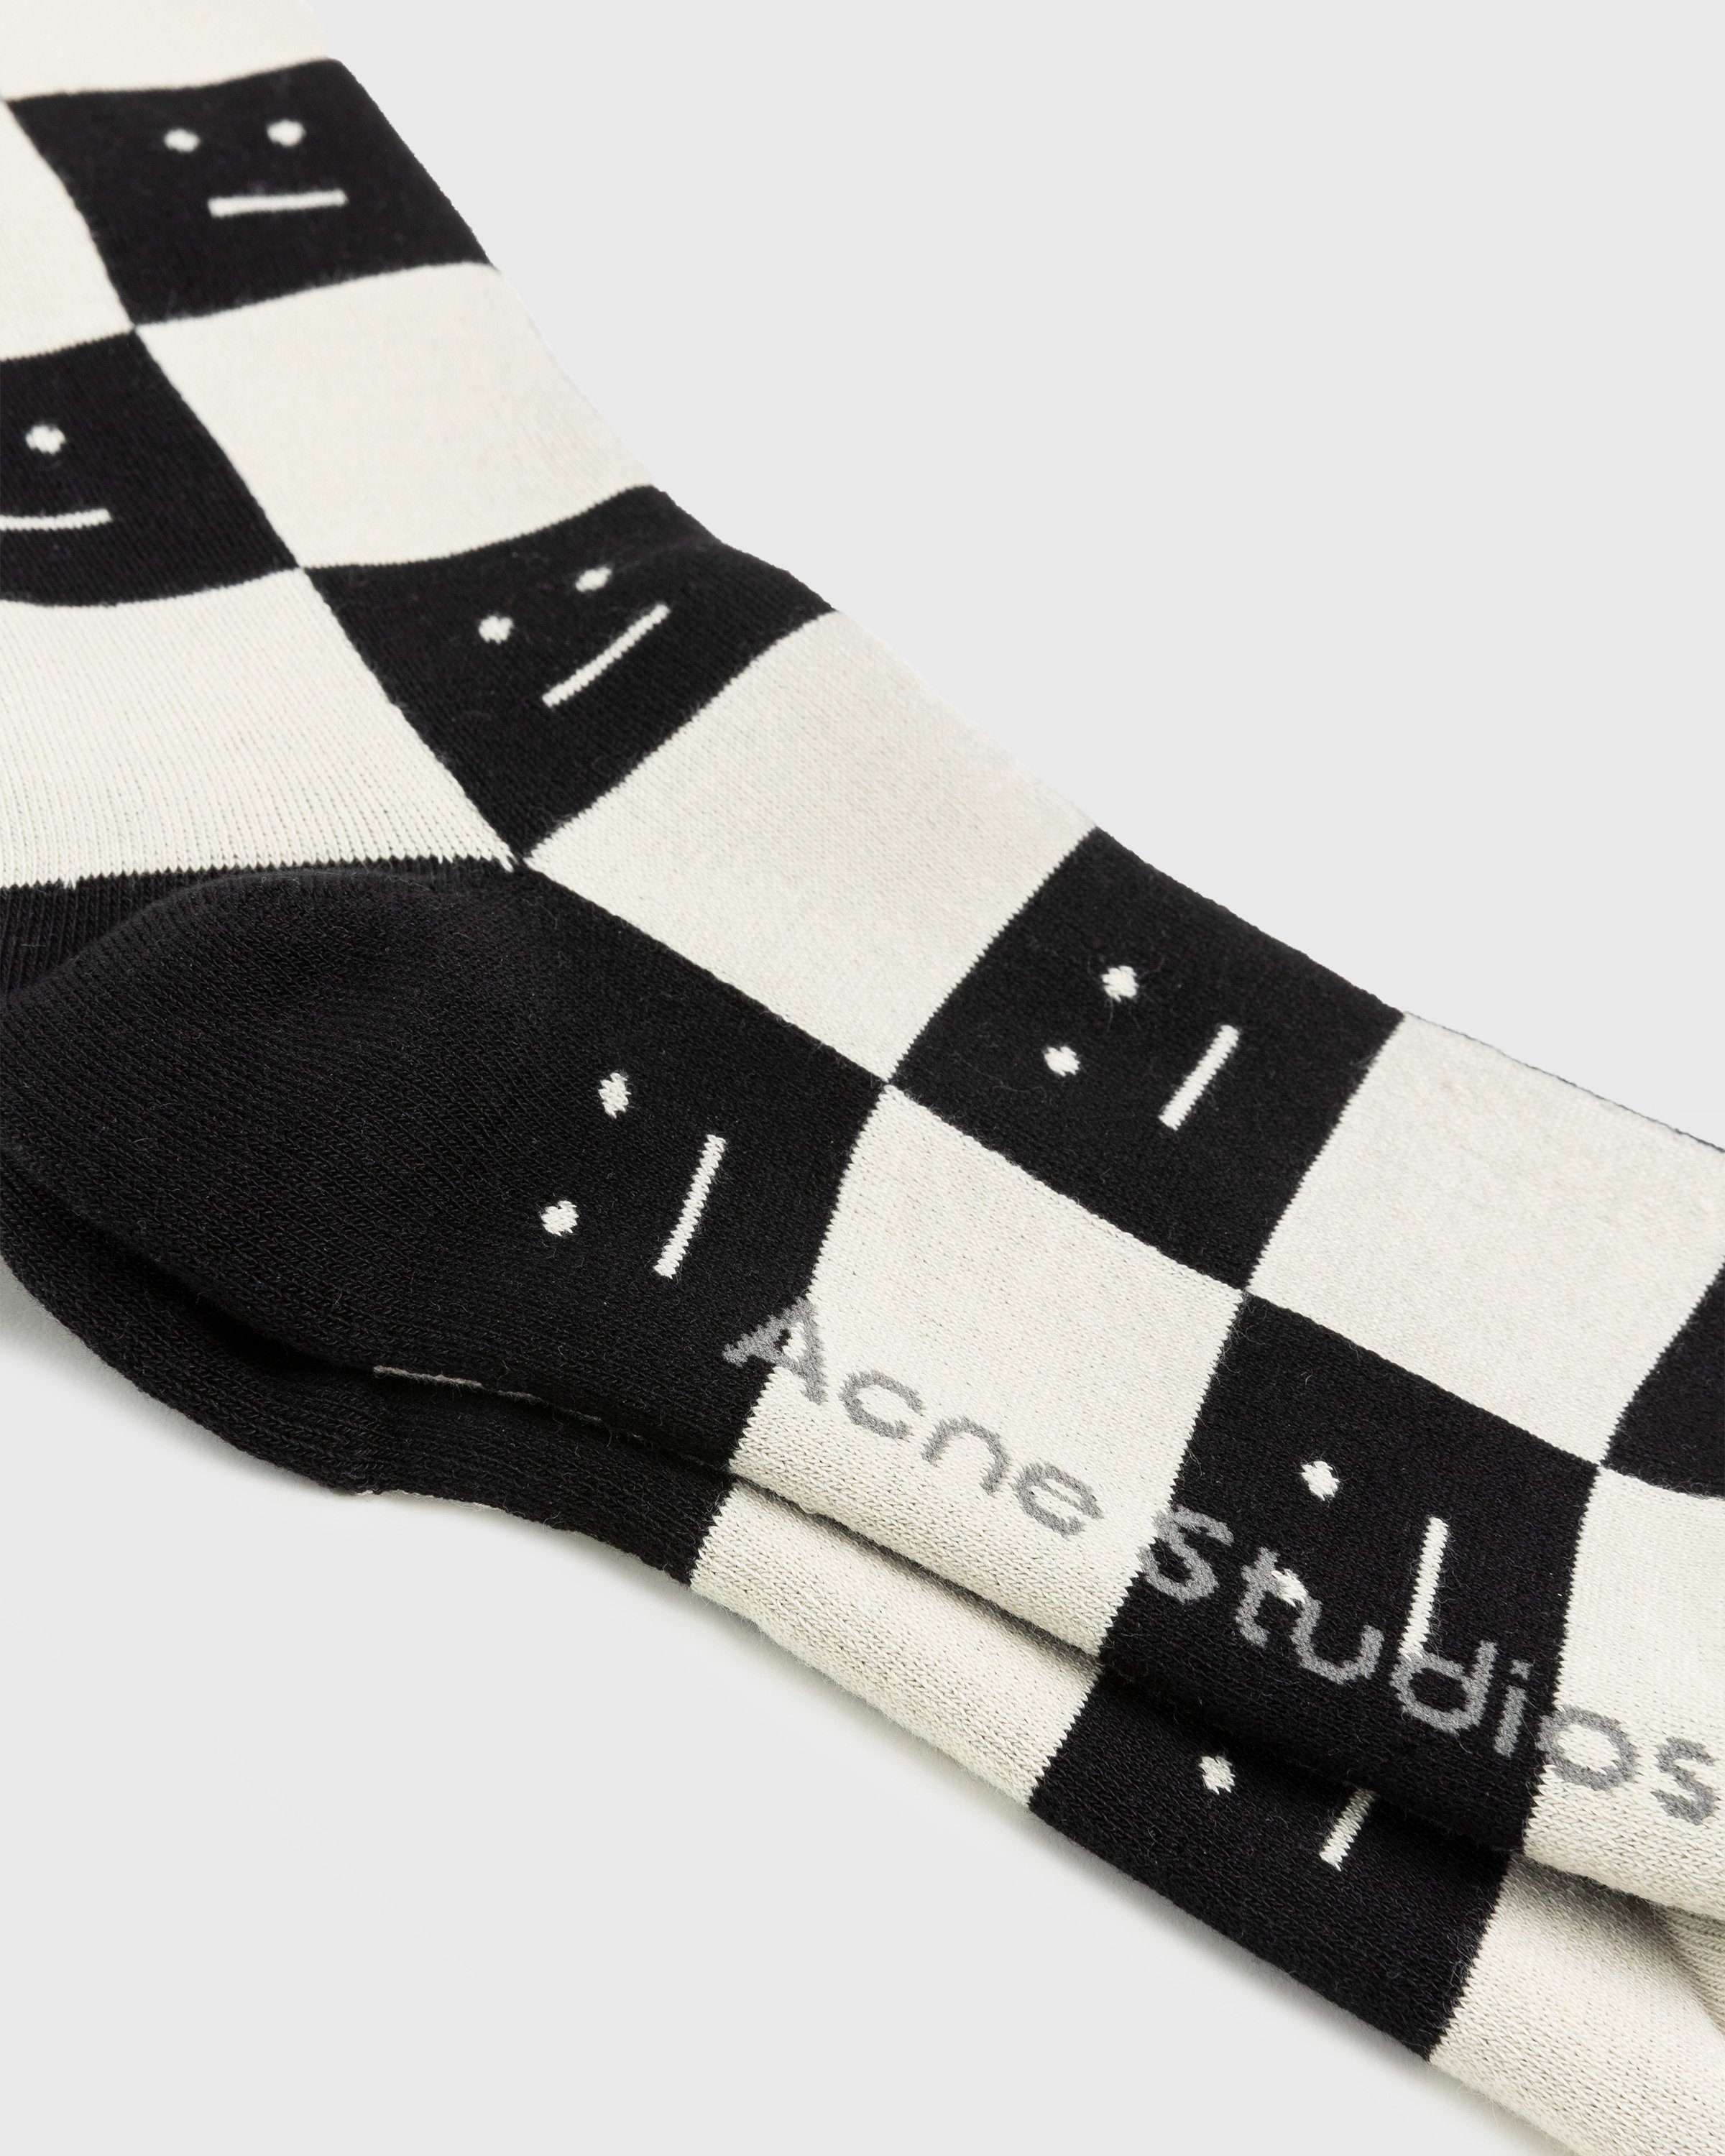 Acne Studios - Checkerboard Socks Black/Oatmeal Beige - Accessories - Black - Image 3